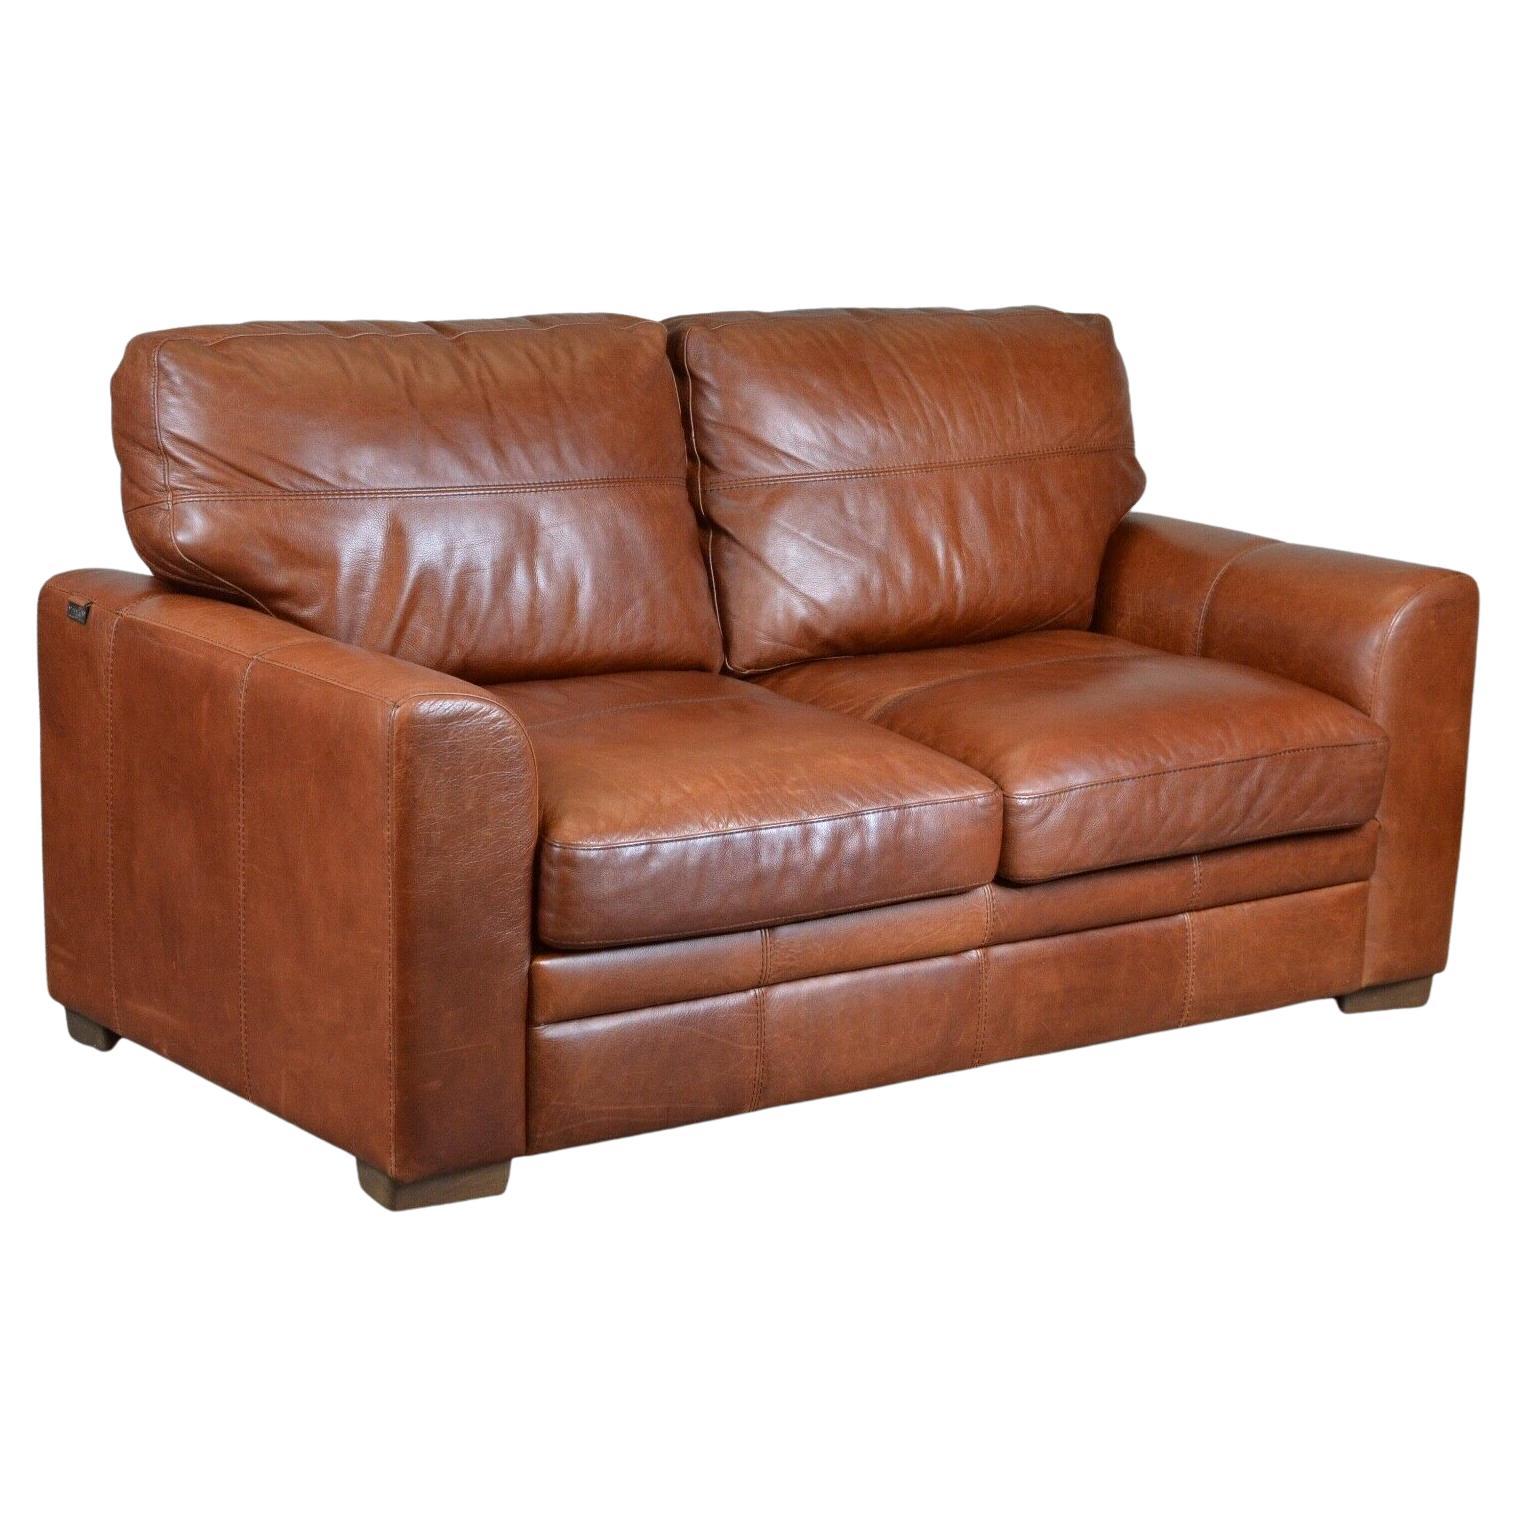 Luxury 2 Seater Viva Italian Designer Tan Leather Sofa / Armchair Available